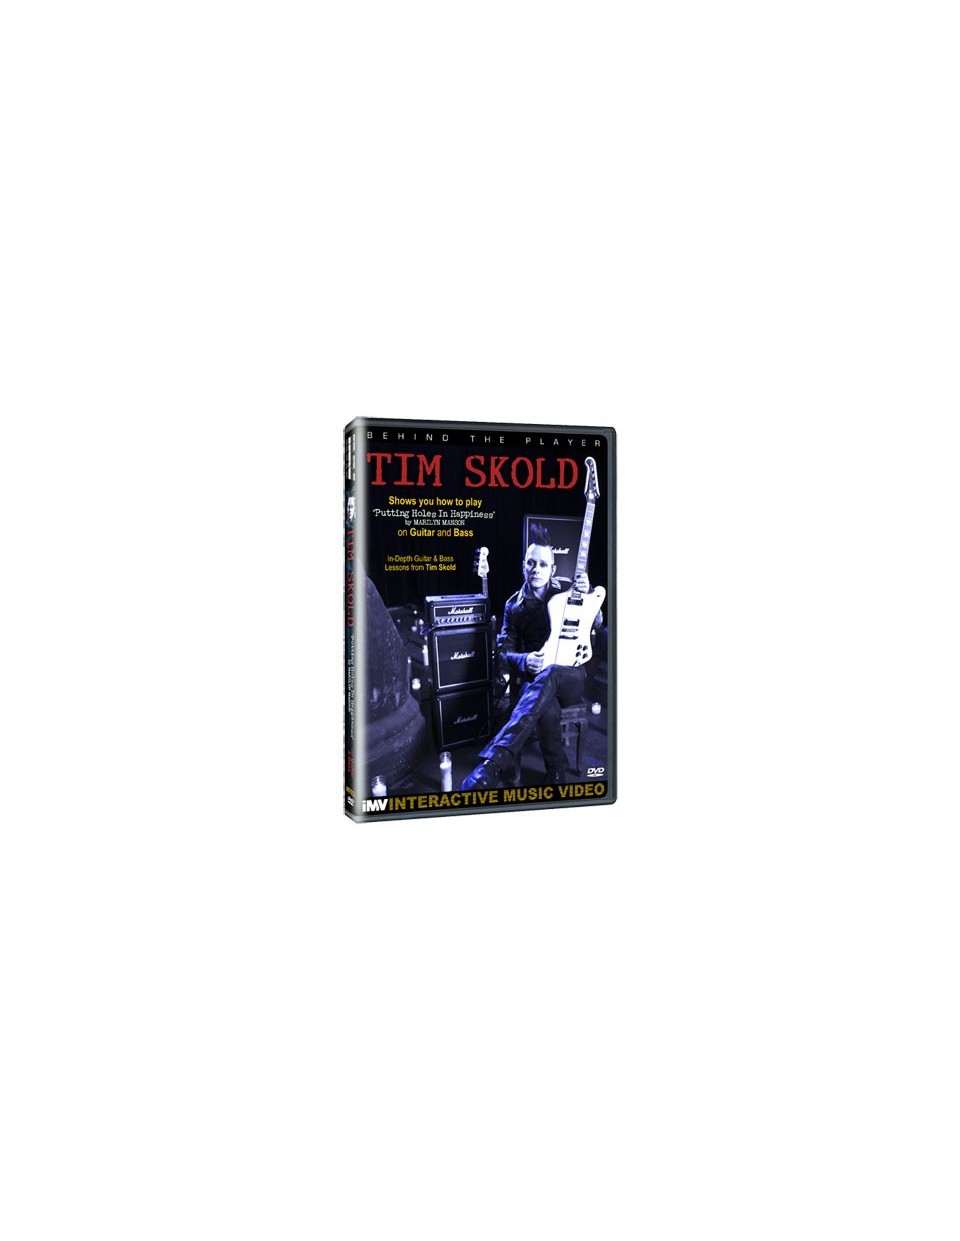 Behind the player DVD: Tim Skold